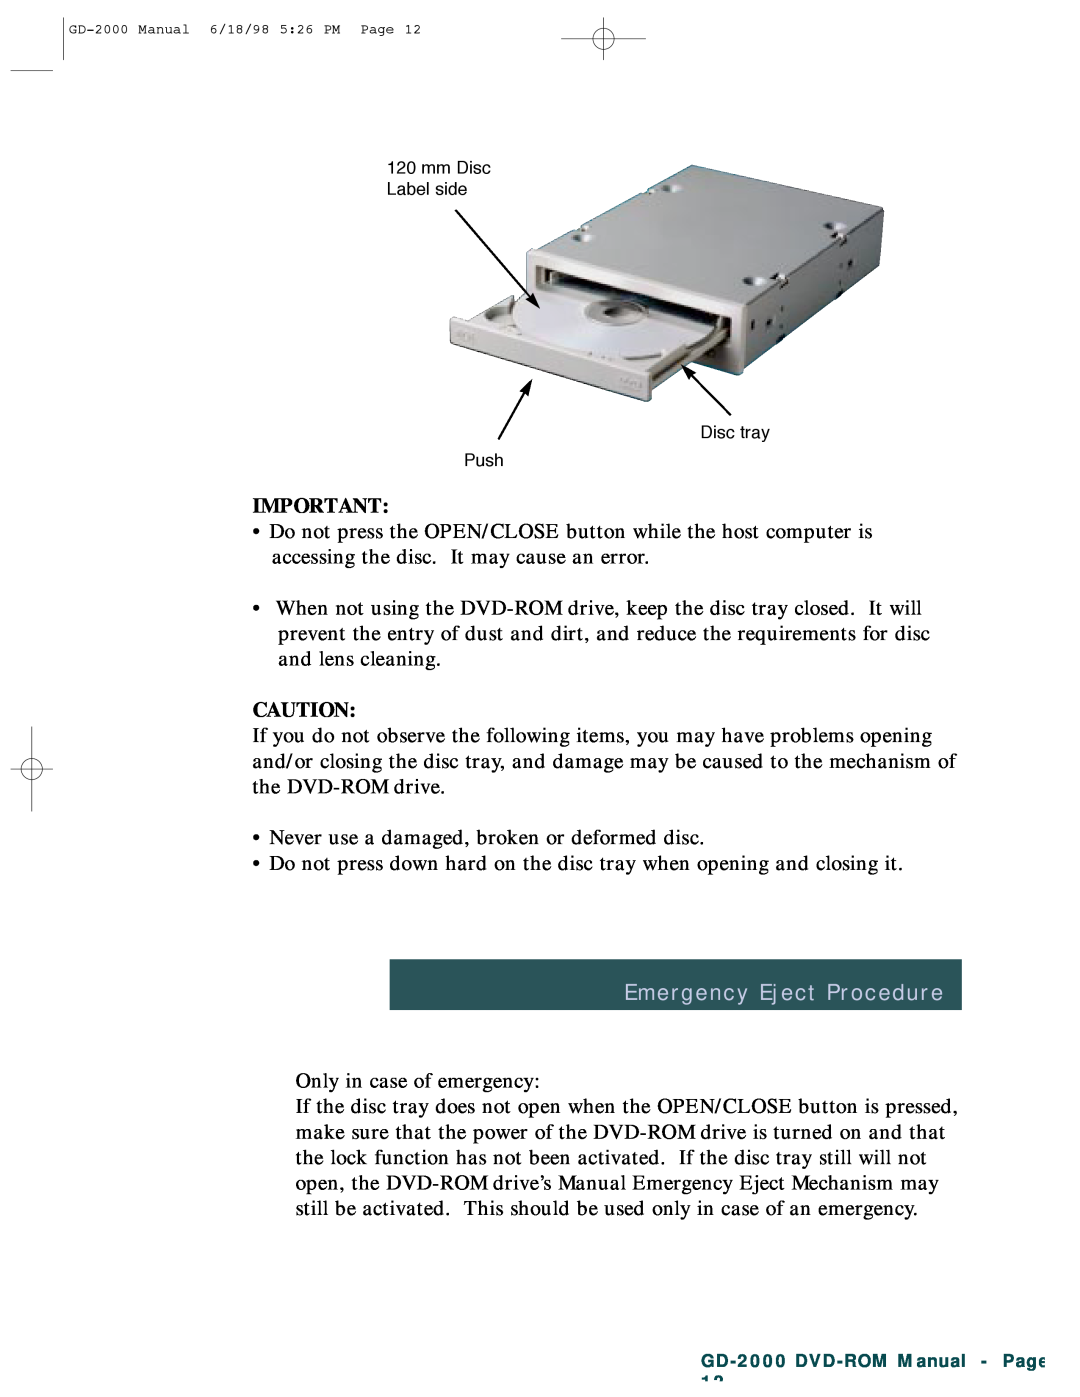 Hitachi GD-2000 manual Emergency Eject Procedure 